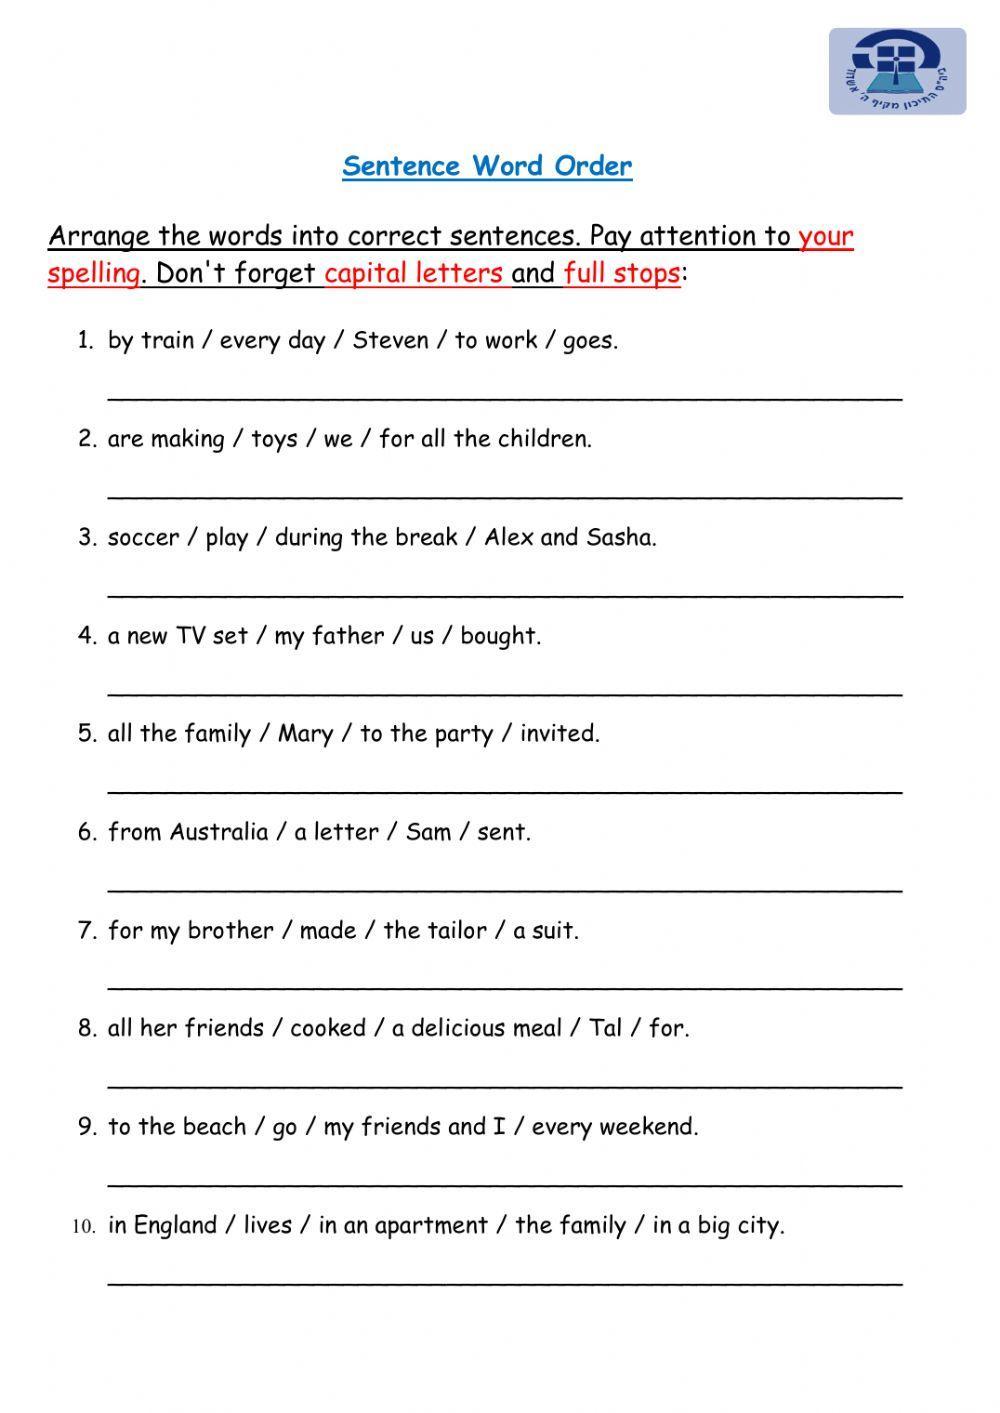 Sentence Word Order - Practice